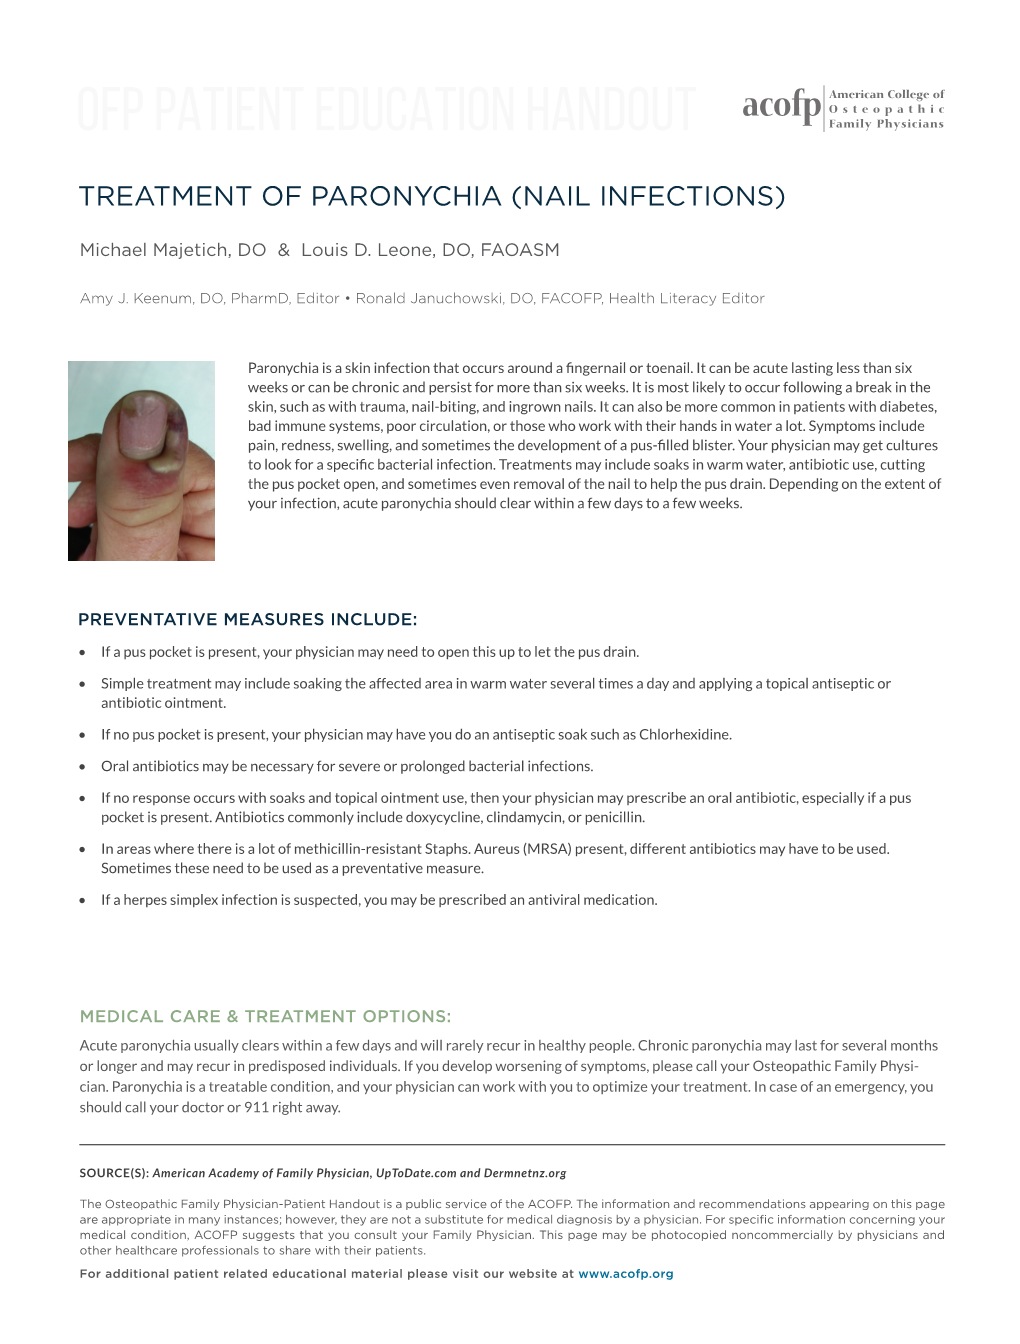 Paronychia (Nail Infections)